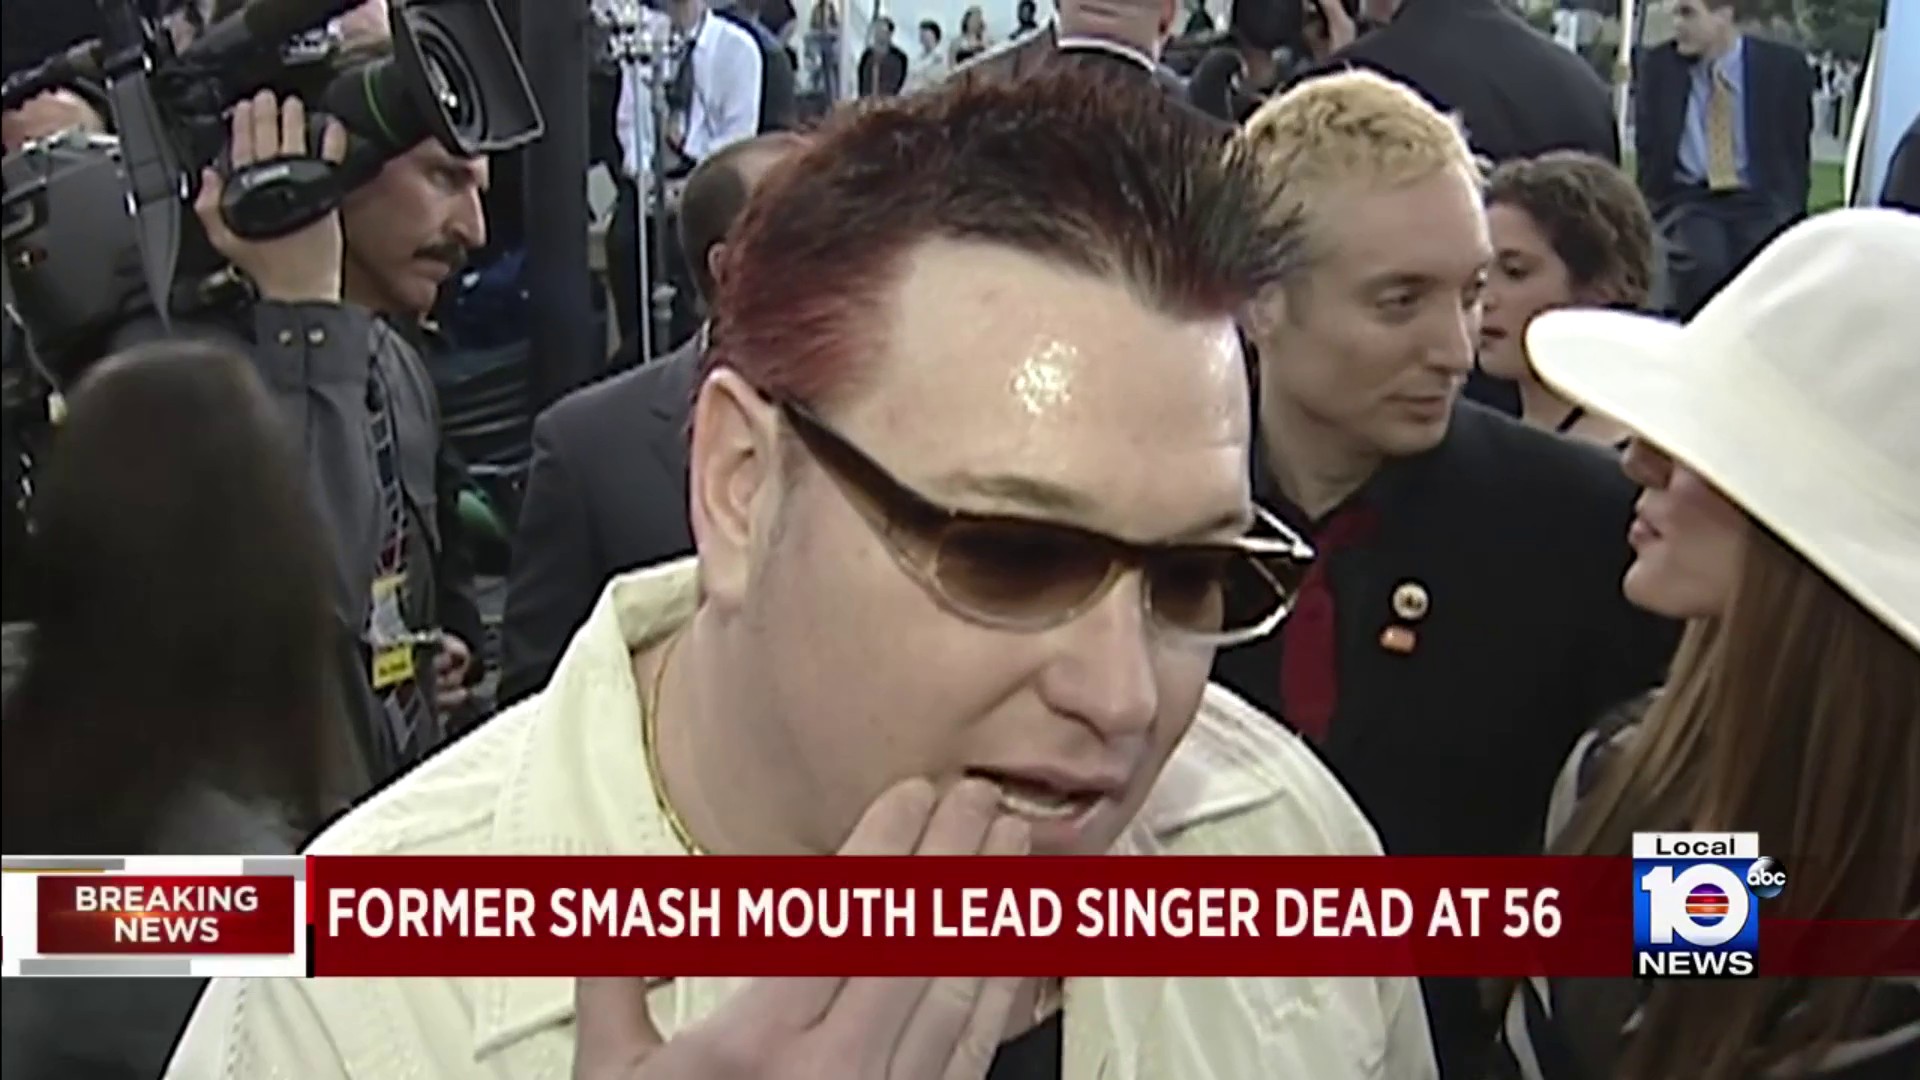 Former Smash Mouth lead singer Steve Harwell dies at 56 